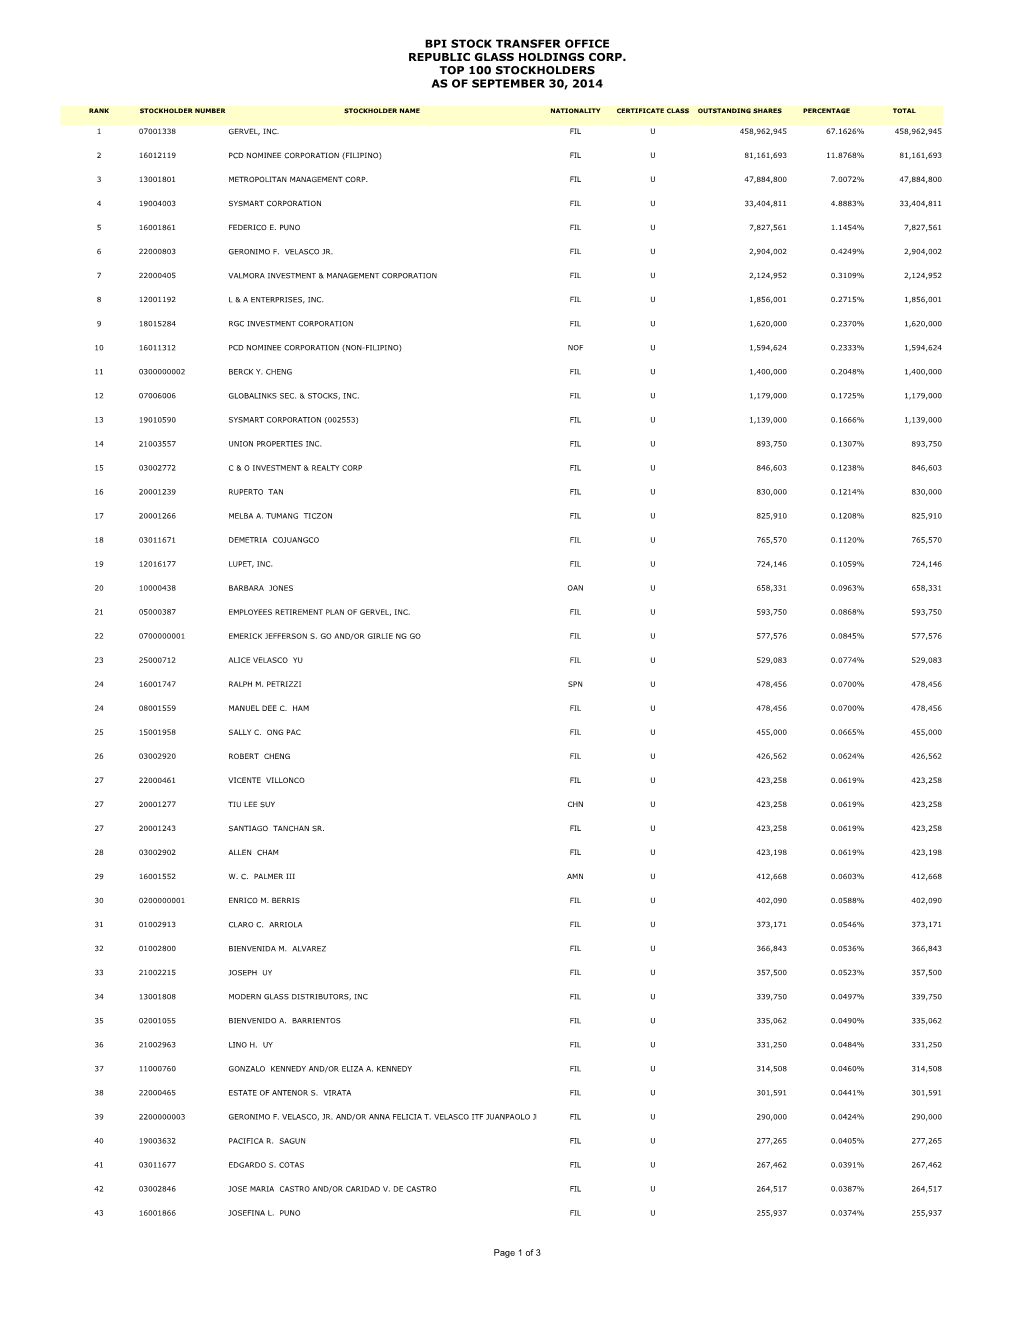 Bpi Stock Transfer Office Republic Glass Holdings Corp. Top 100 Stockholders As of September 30, 2014